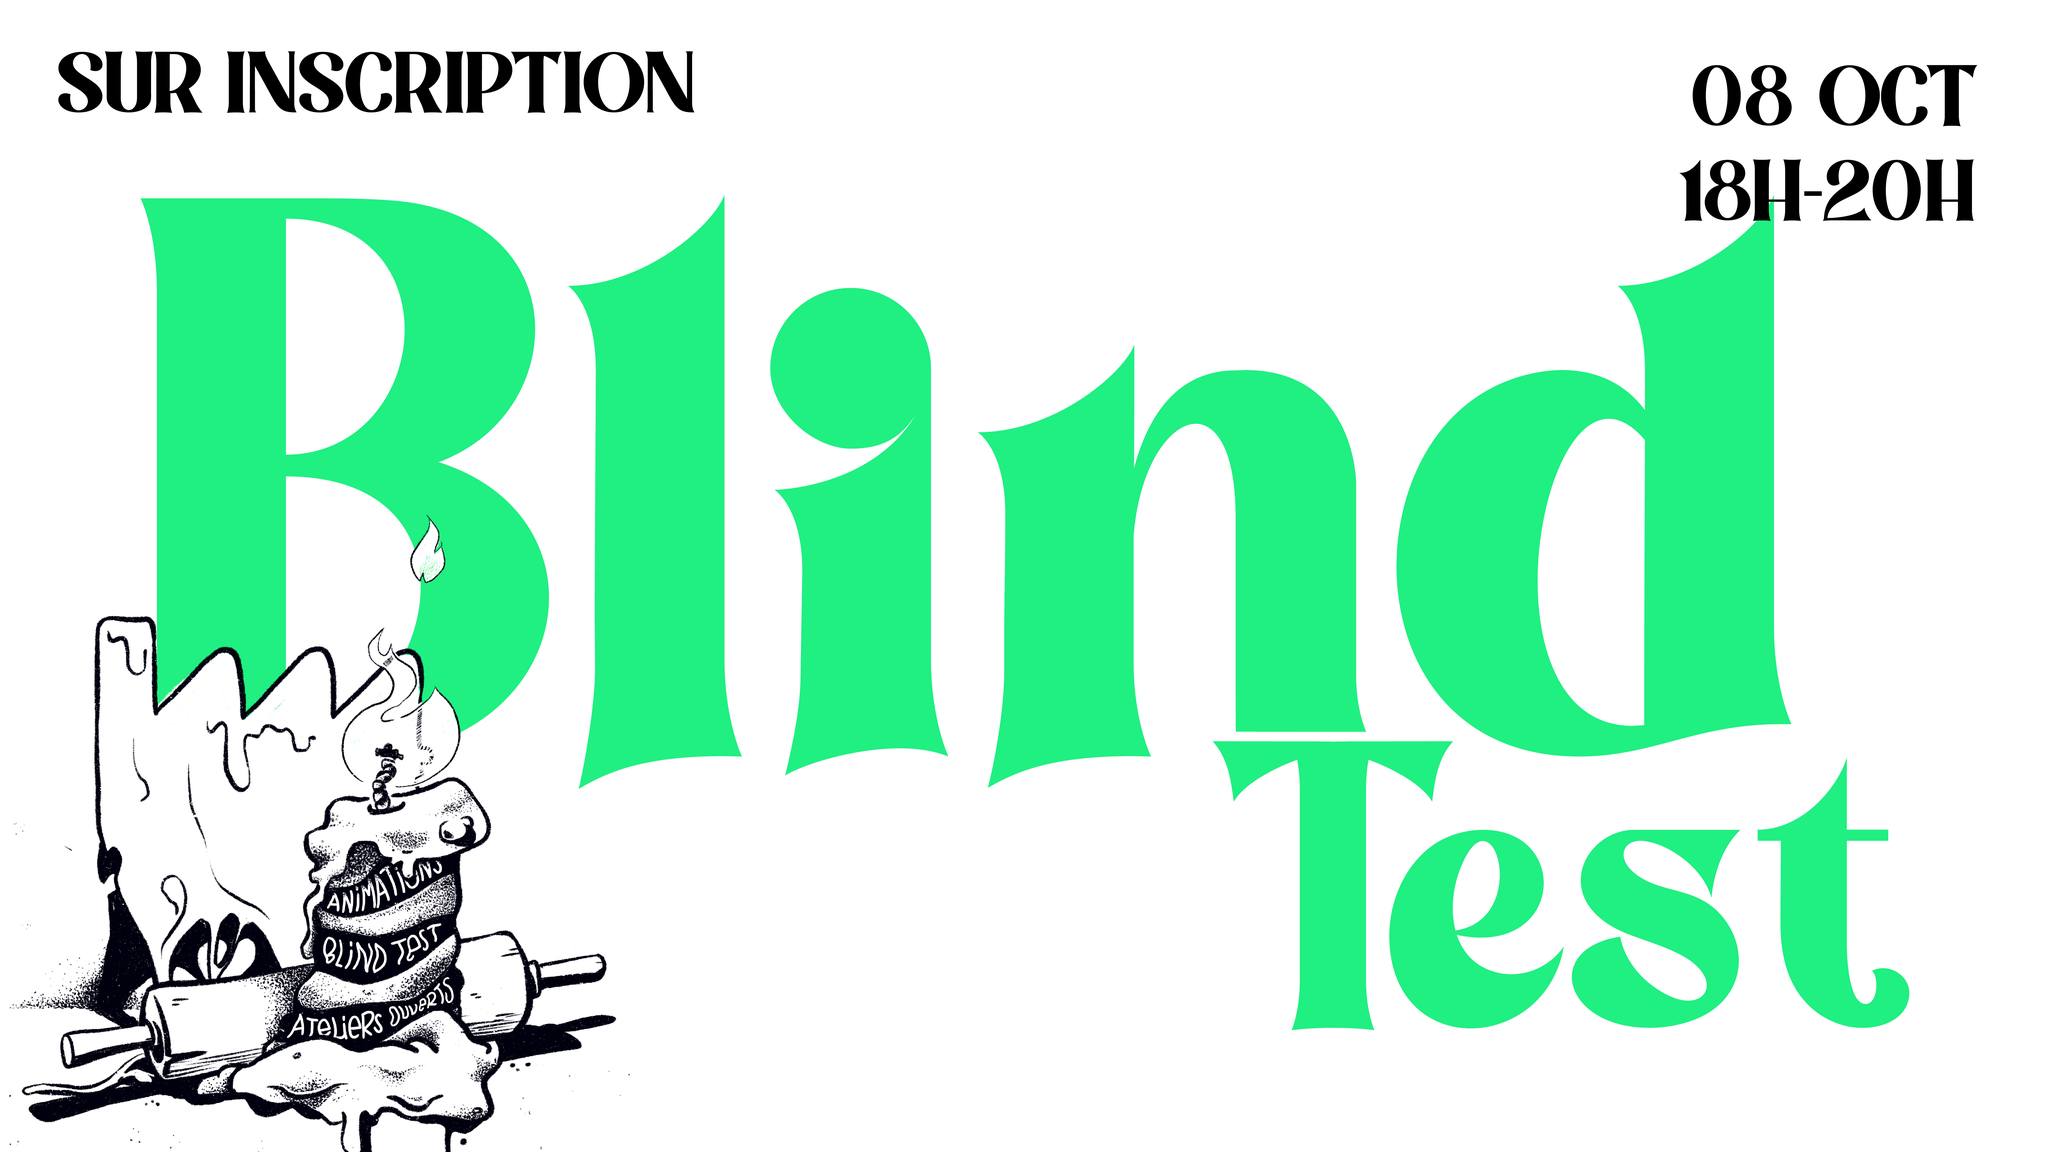 BLIND TEST HAPPY BIRTHDAY HANG'ART